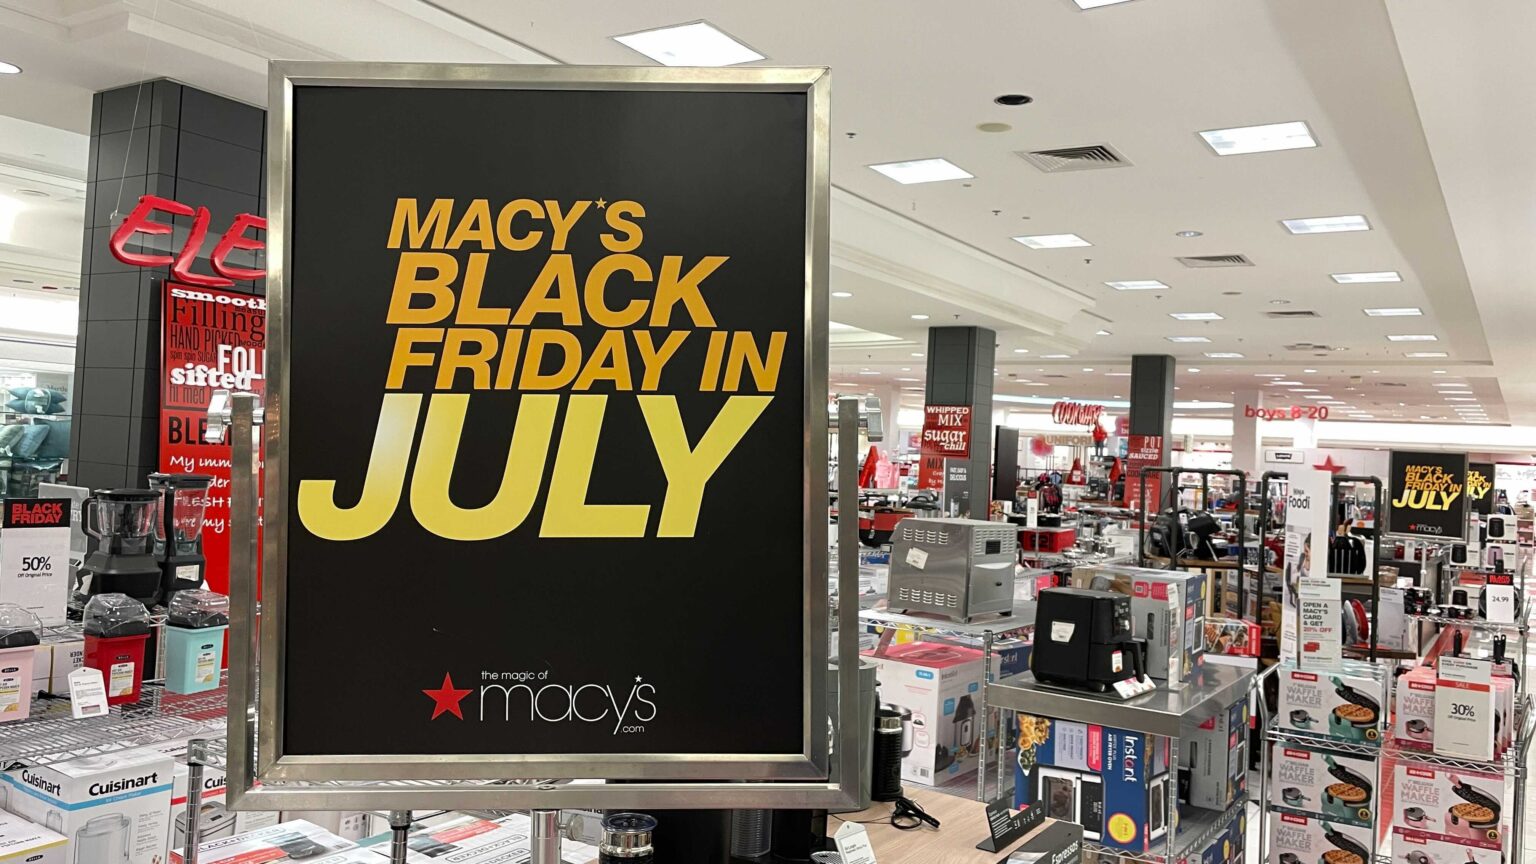 MACY'S BLACK FRIDAY IN JULY SALE IS LIVE The Freebie Guy®